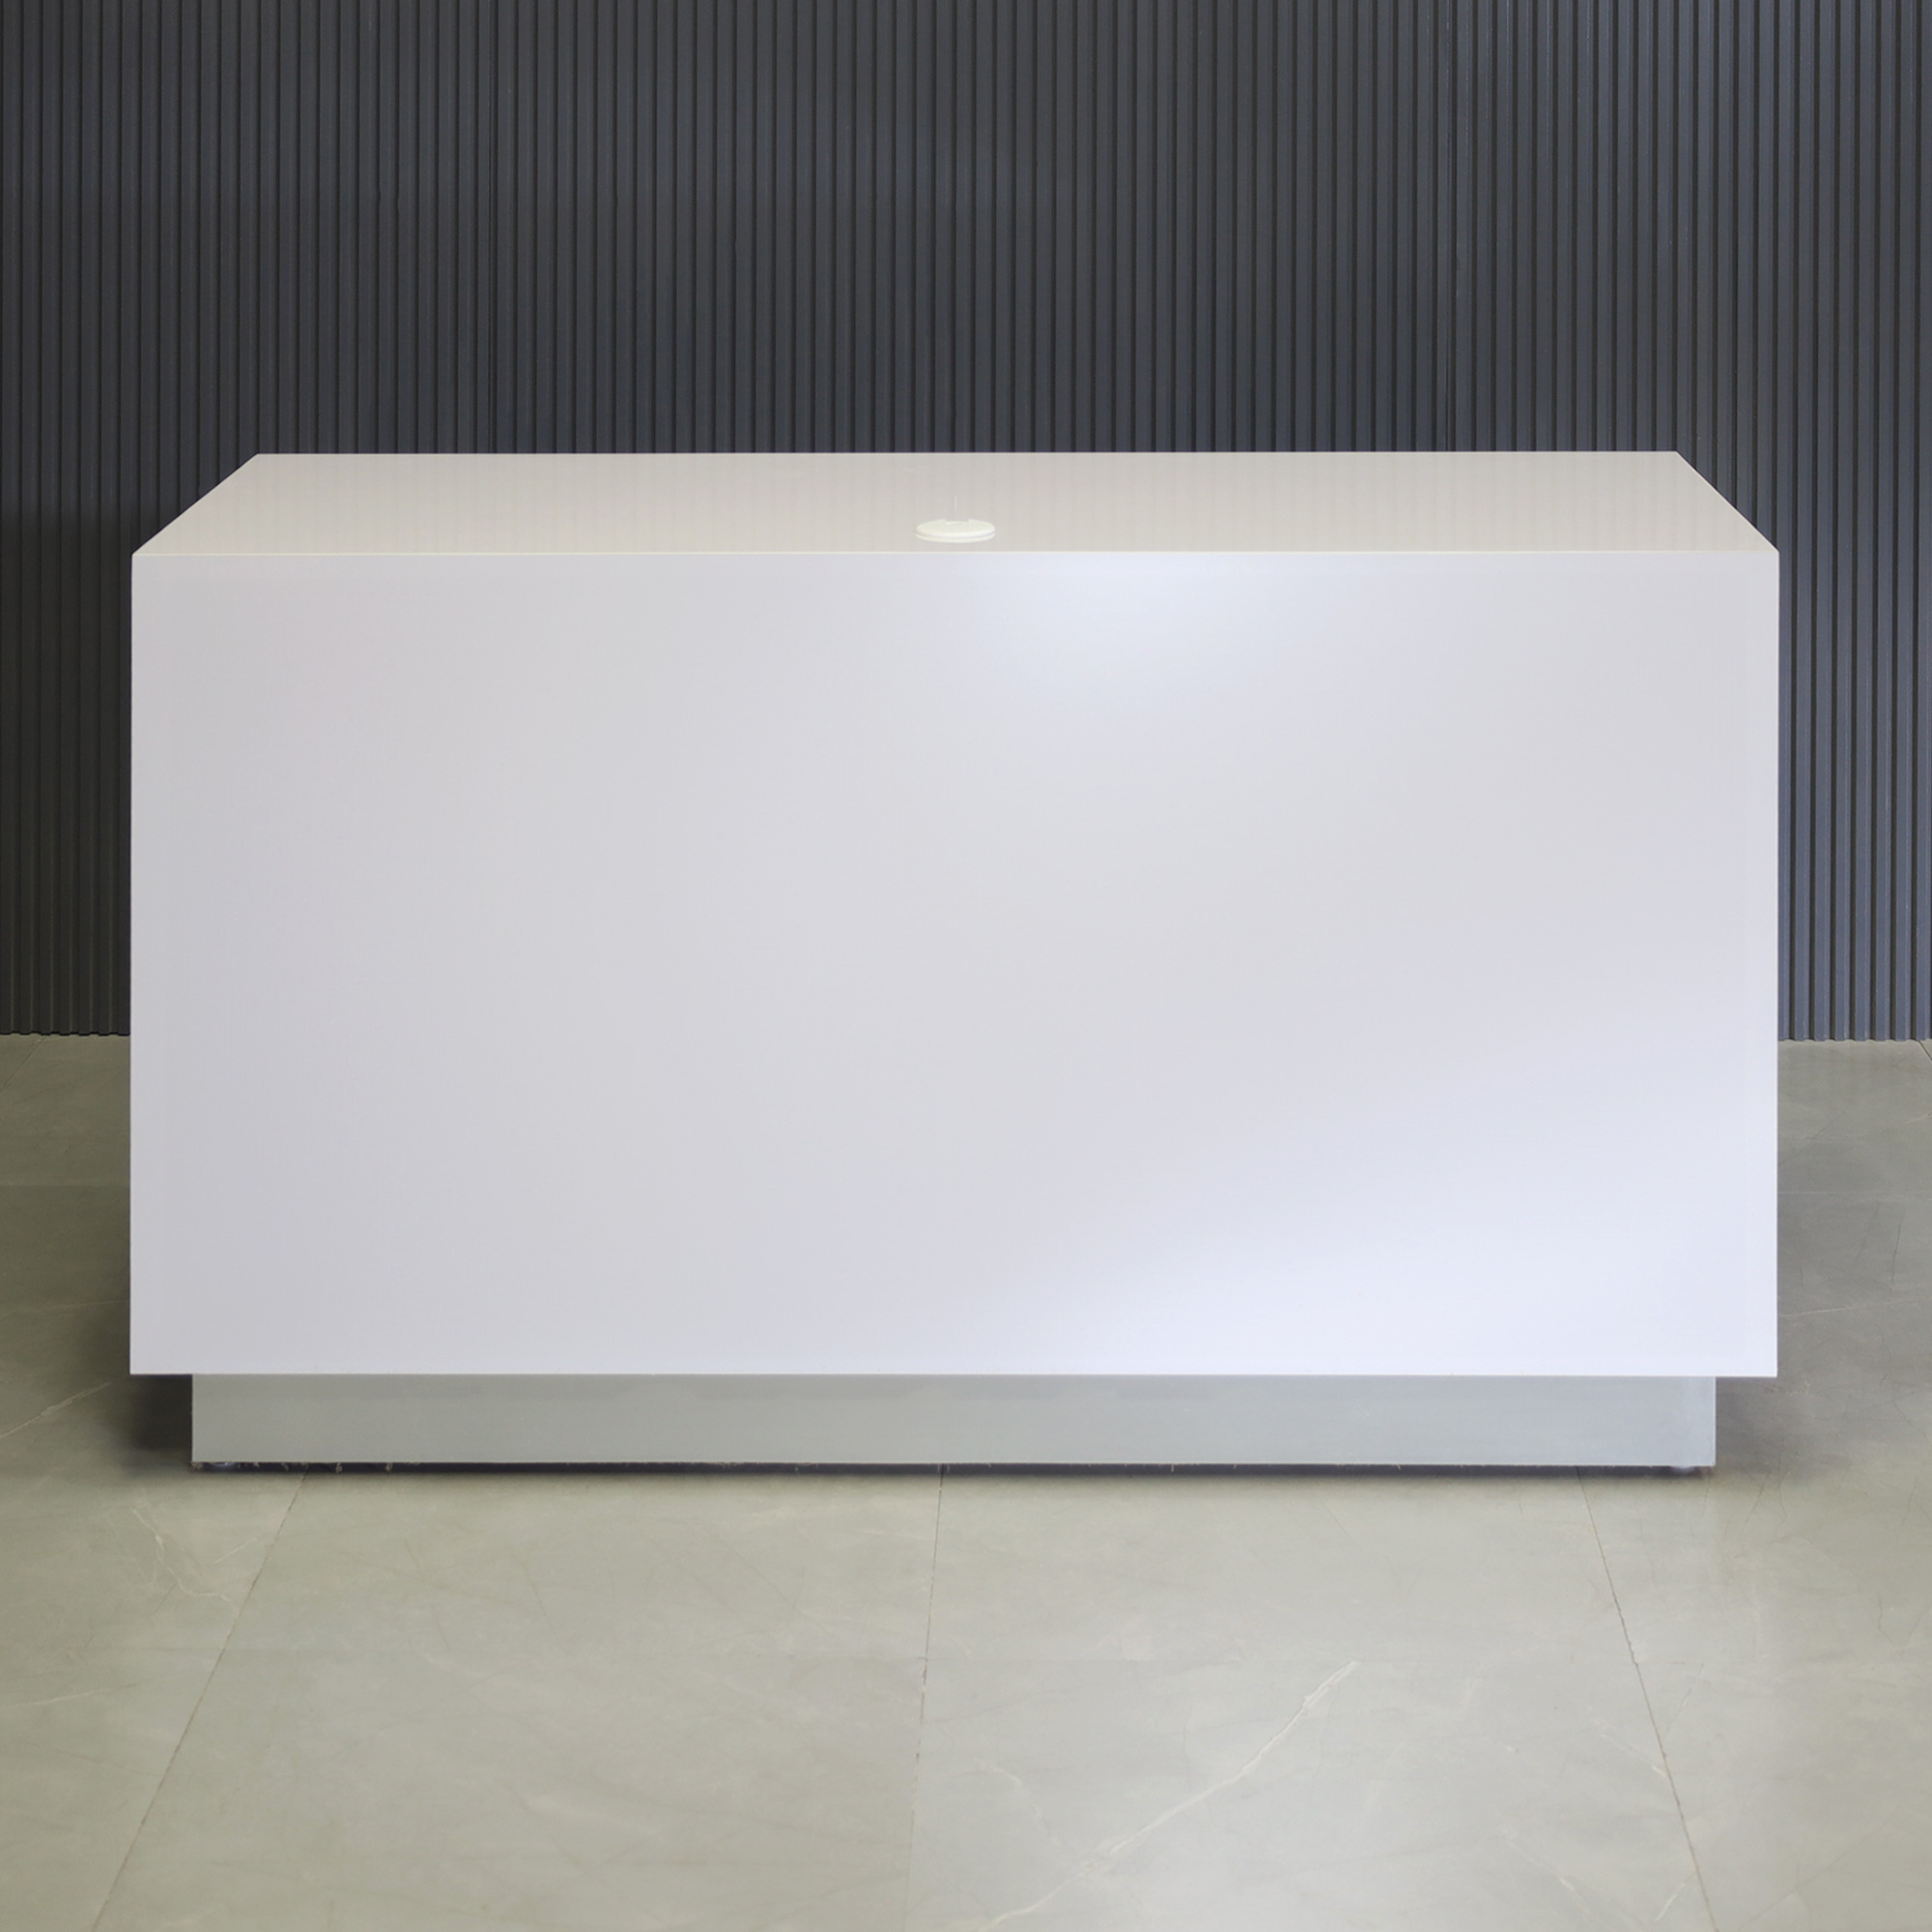 60-inch Houston Custom Reception Desk in white gloss laminate main desk and brushed aluminum toe-kick, shown here.